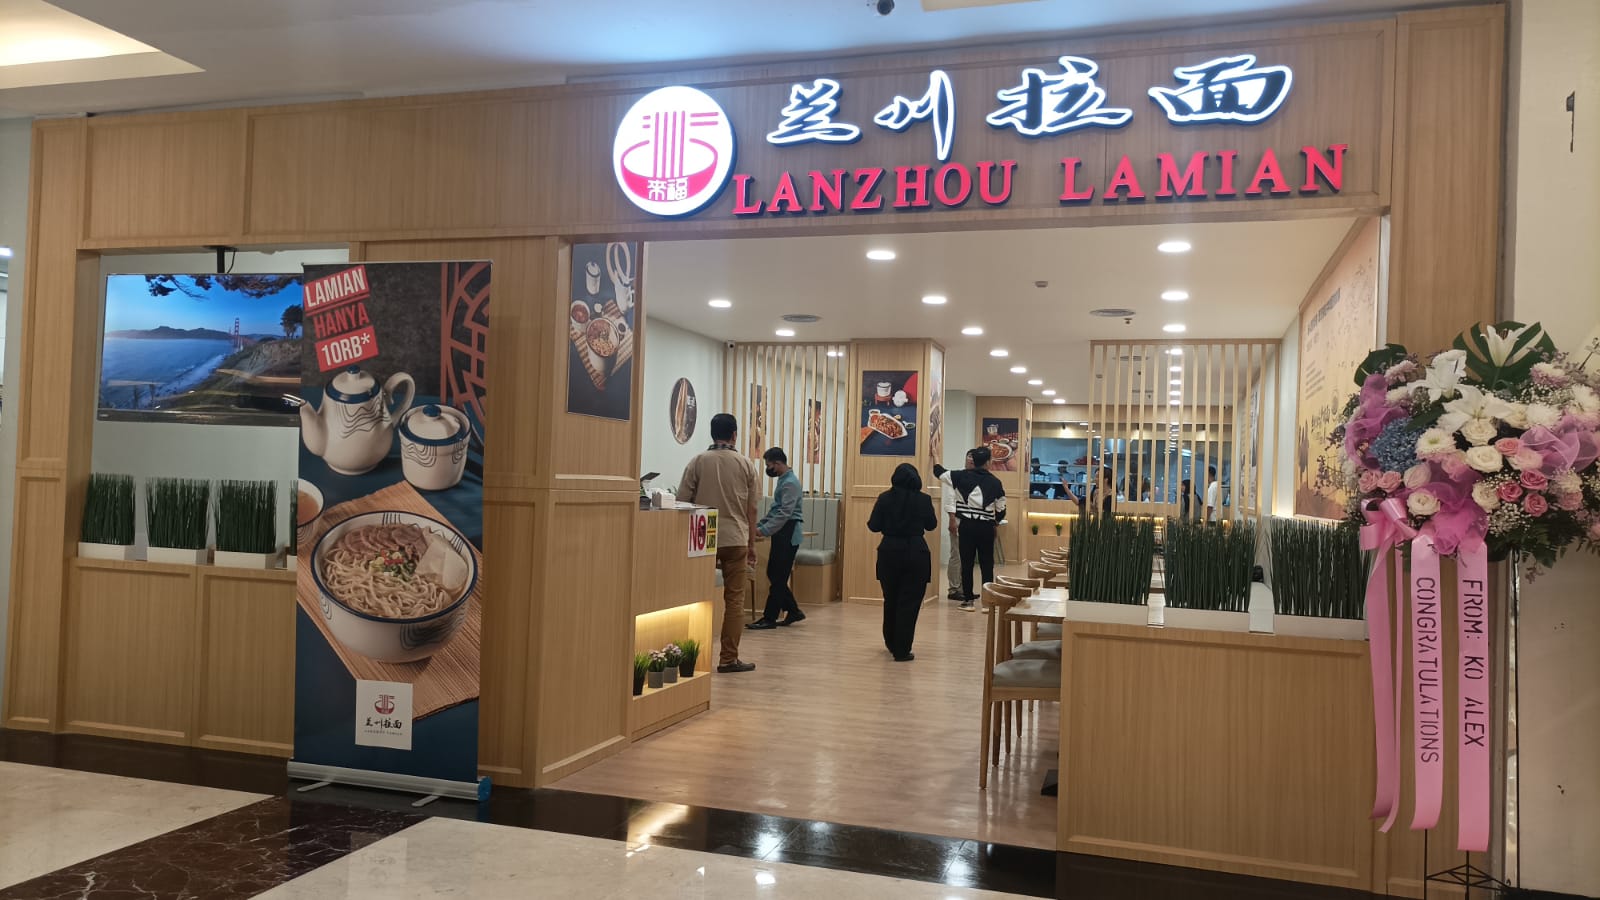 Lanzhou Lamian Buka Gerai Baru di Puri Indah Mall, Lebih Premium dan Banyak Pilihan Menu